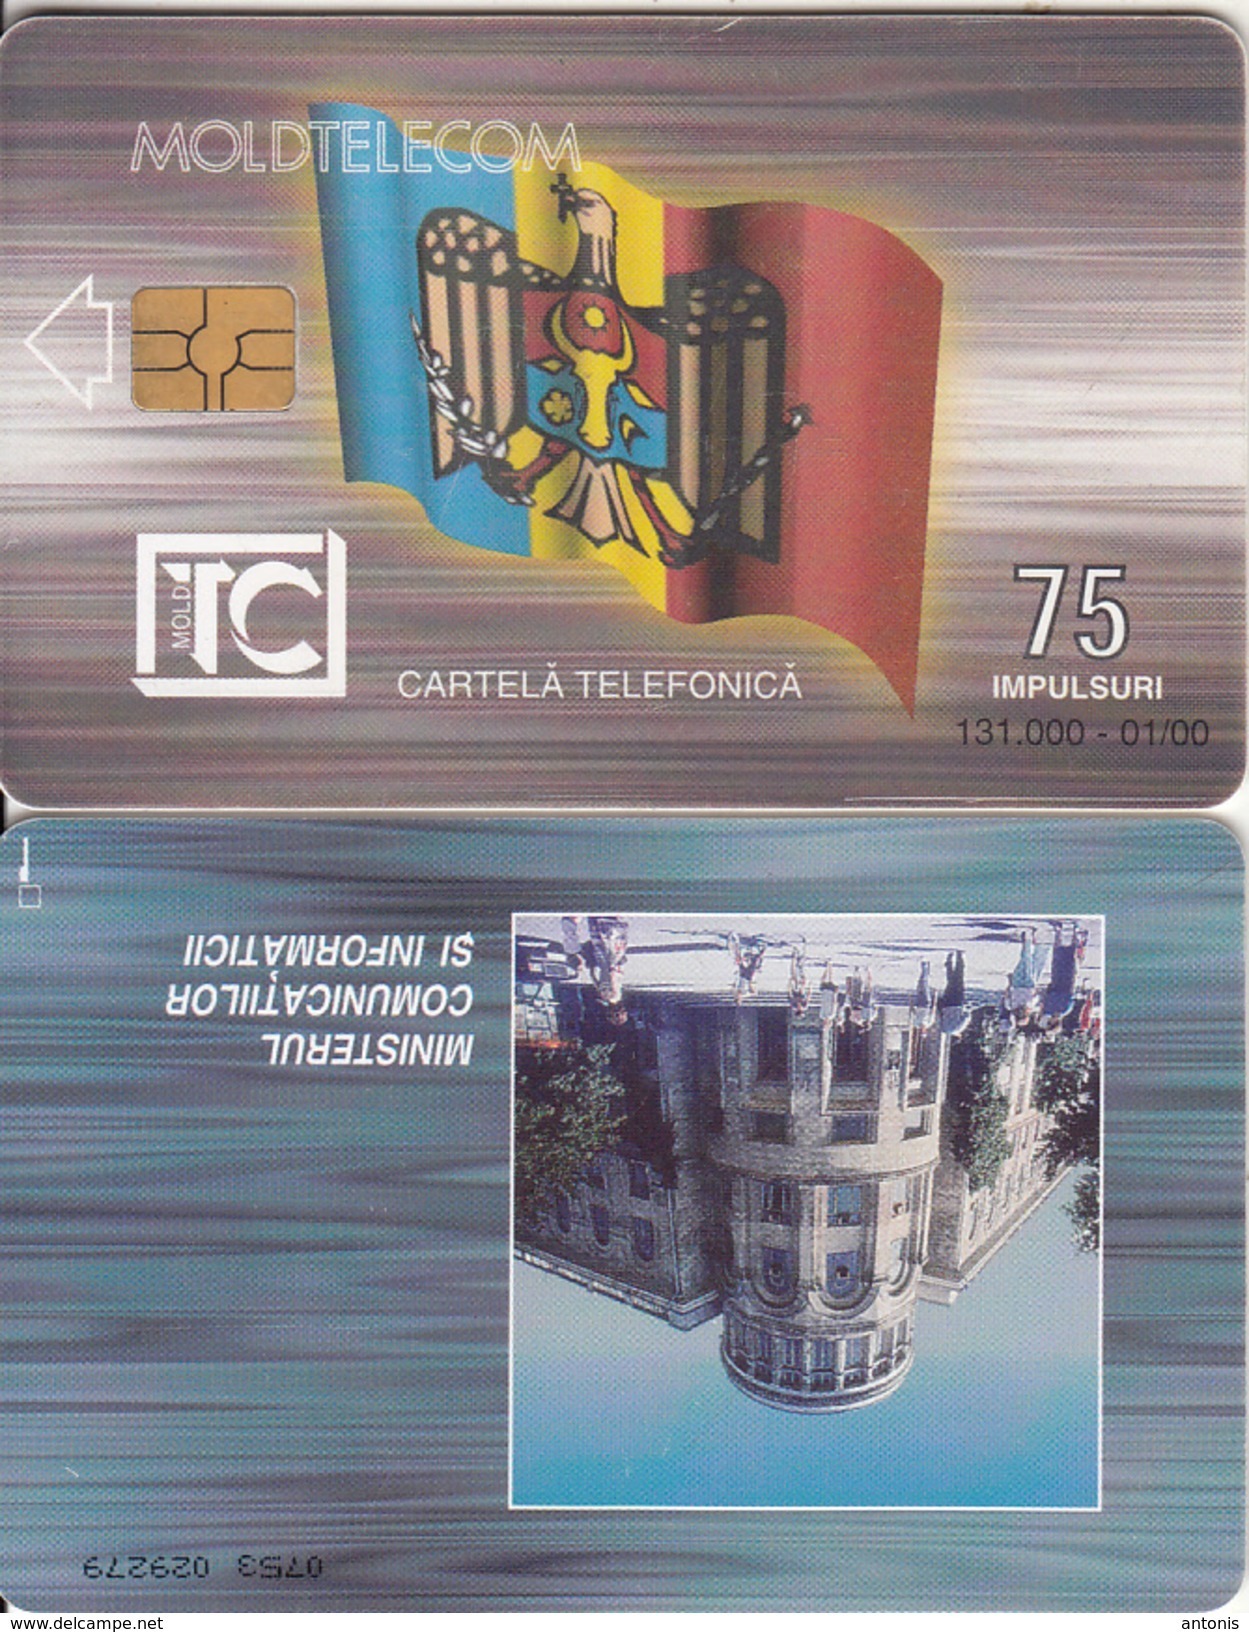 MOLDOVA - Flag, Ministry Of PTT, Moldtelecom Telecard 75 Units, 01/00, Used - Moldavie